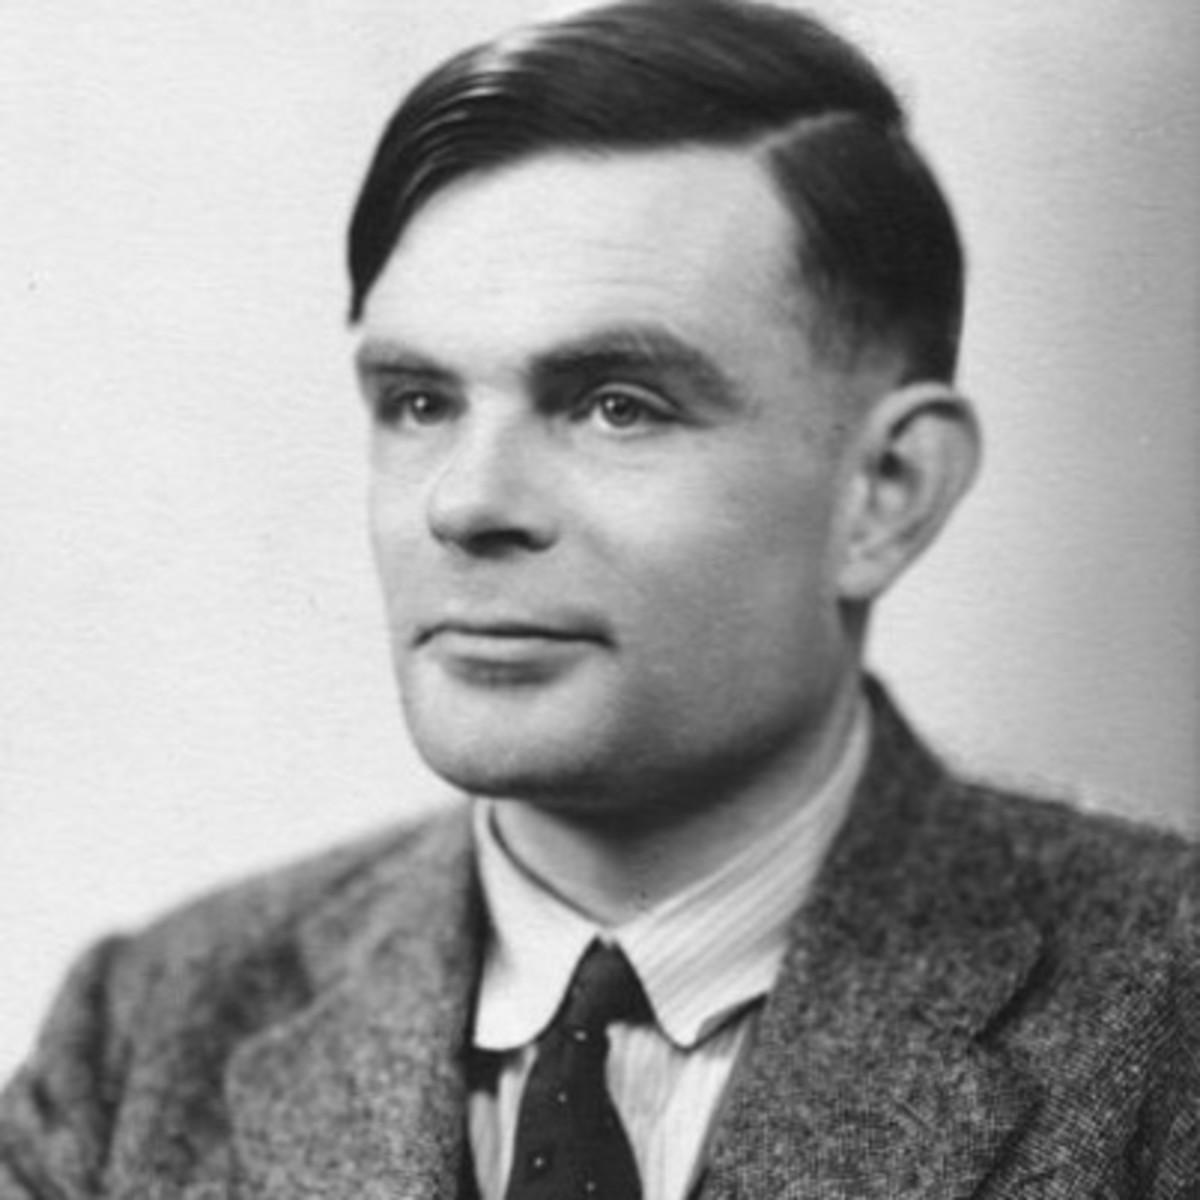 beroemdheden who died young afbeeldingen Alan Mathison Turing 1912